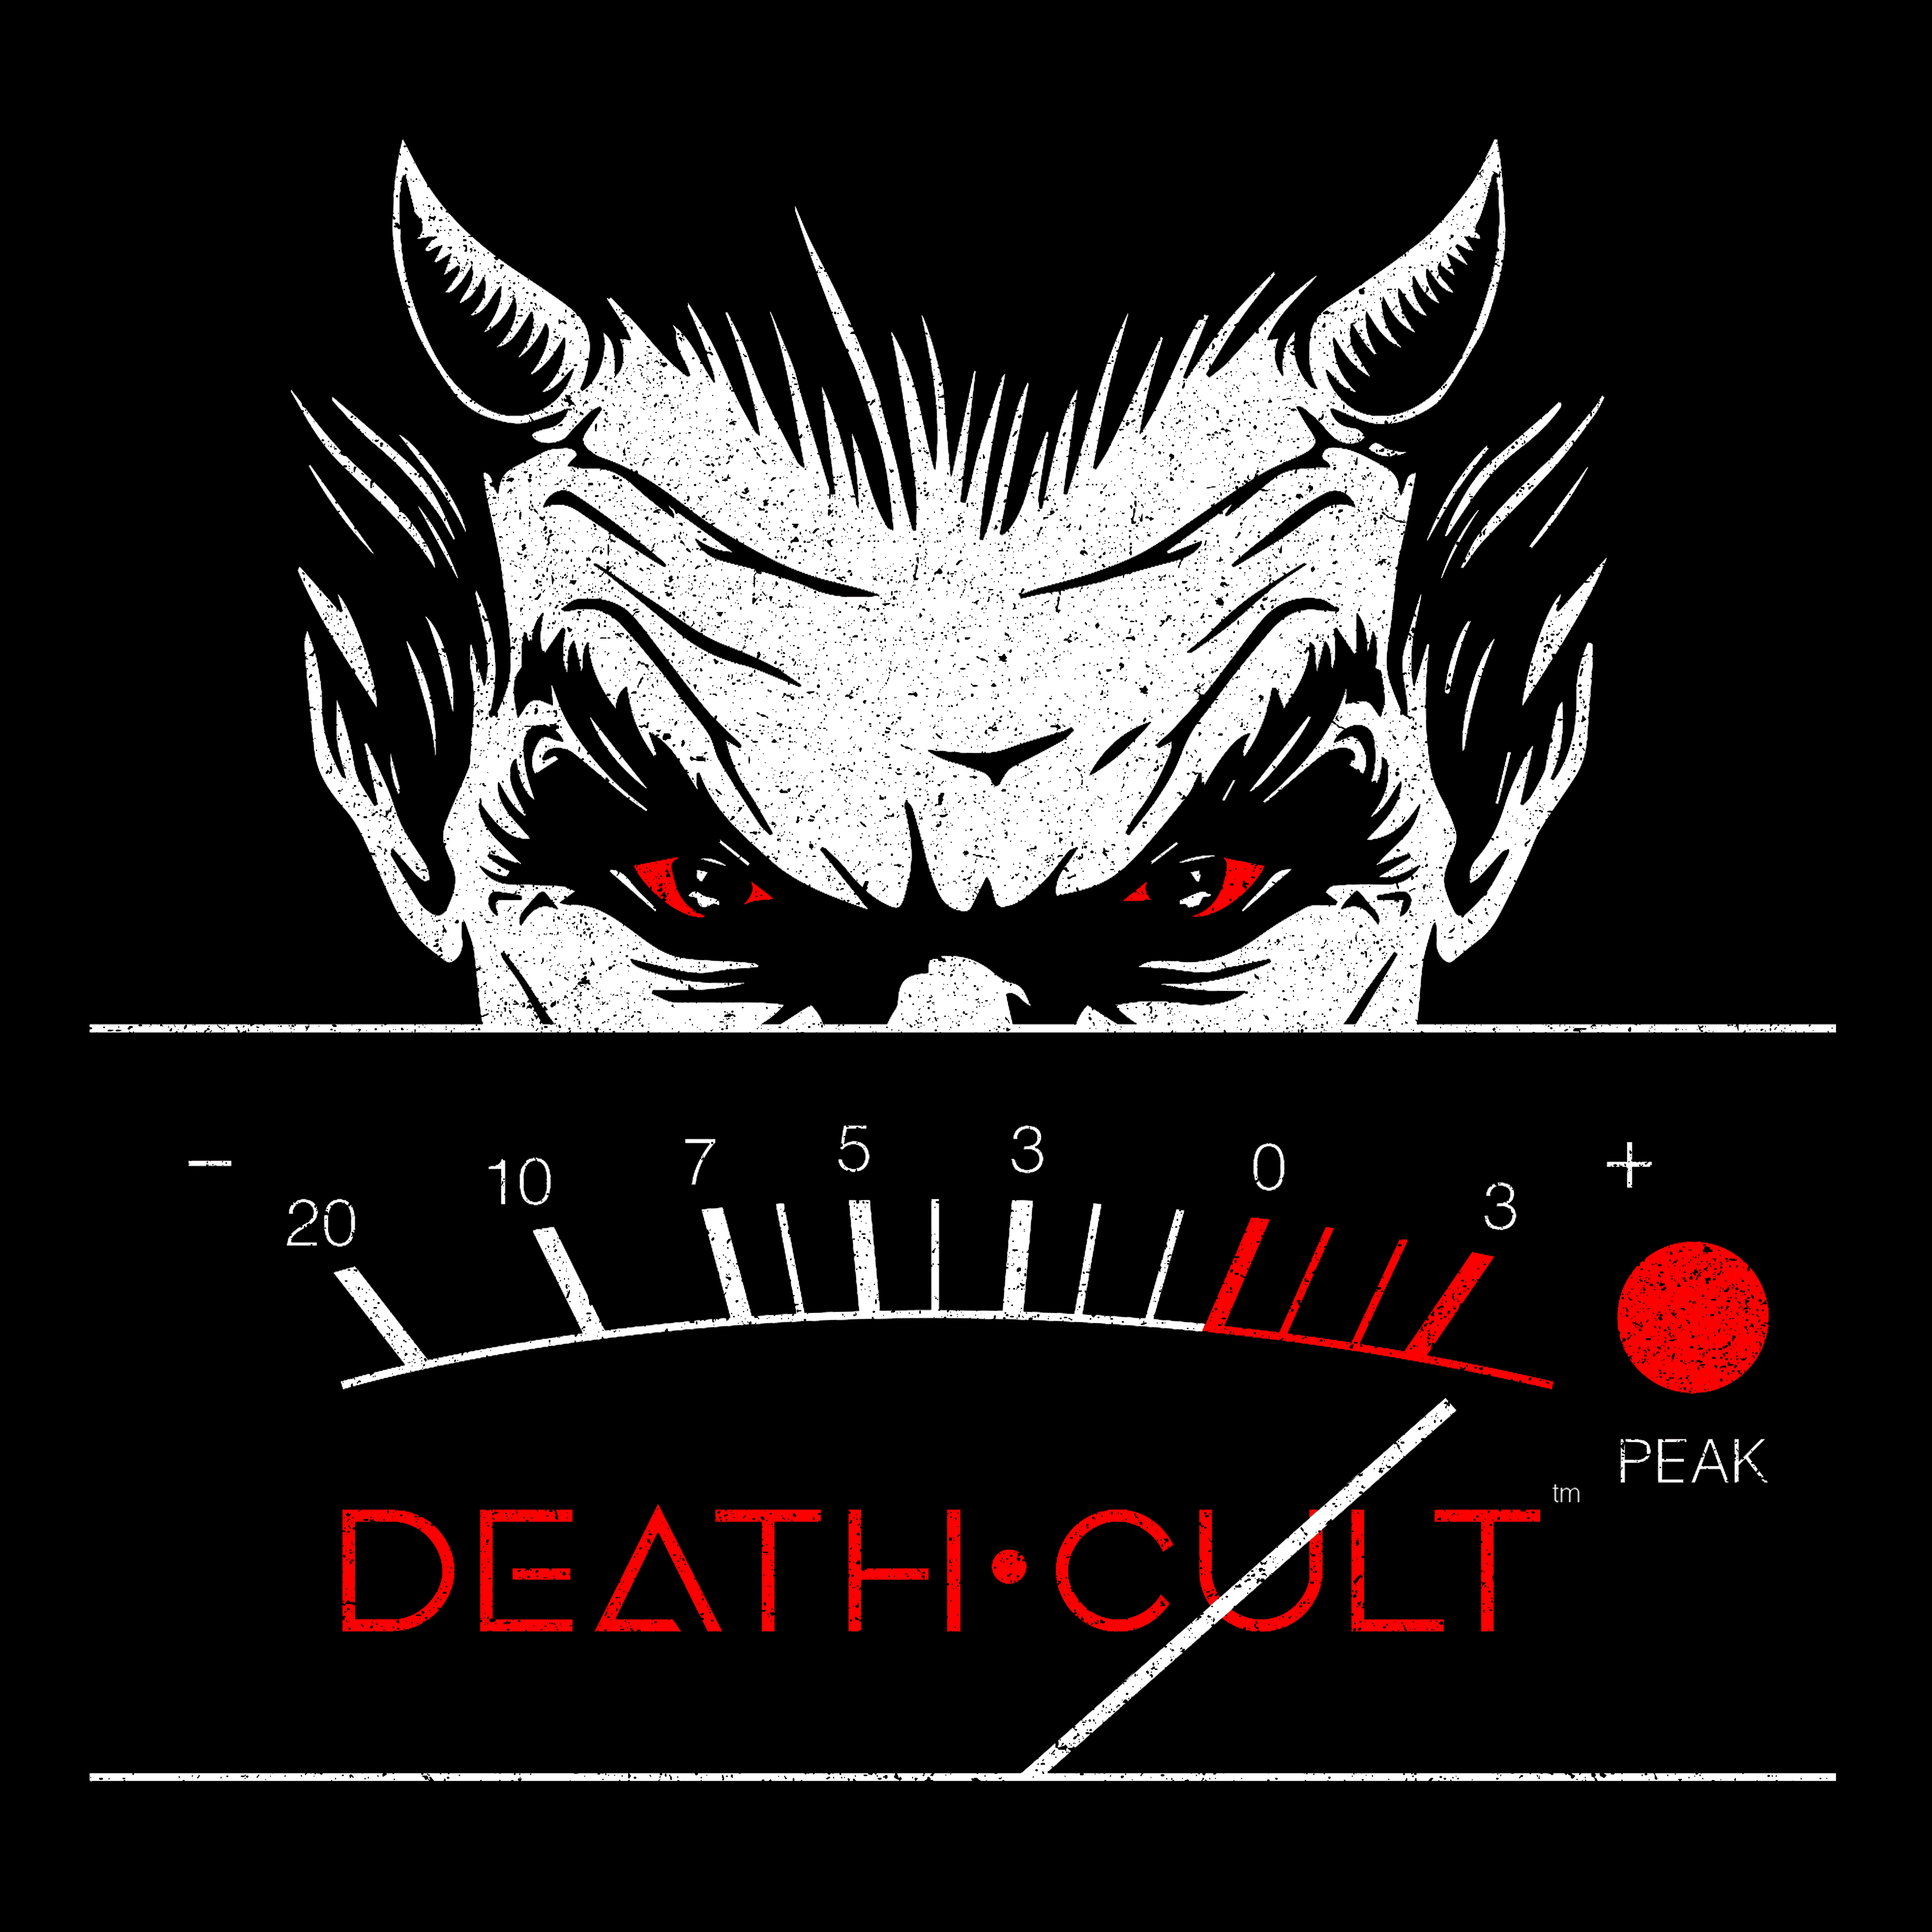 Deathcult Studios - Peak Deathcult